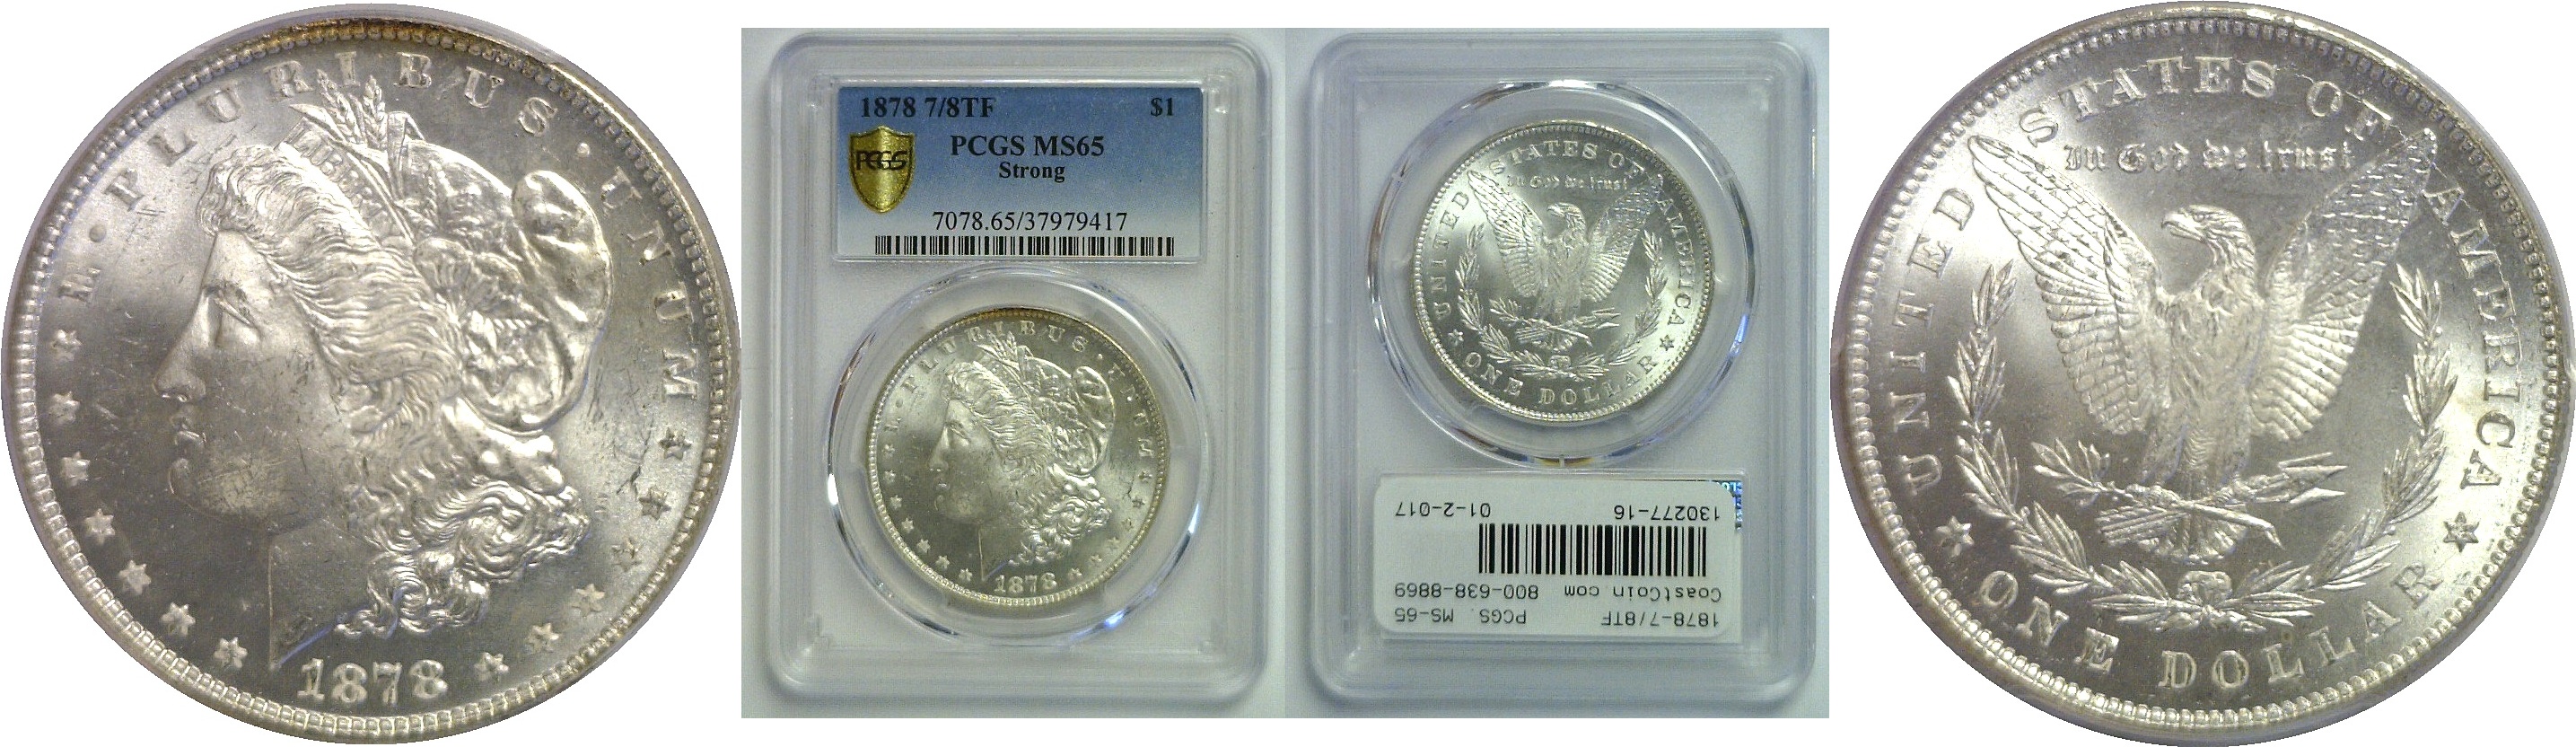 1878-7/8TF. PCGS. MS-65. | Morgan Dollar | Coast to Coast Coins